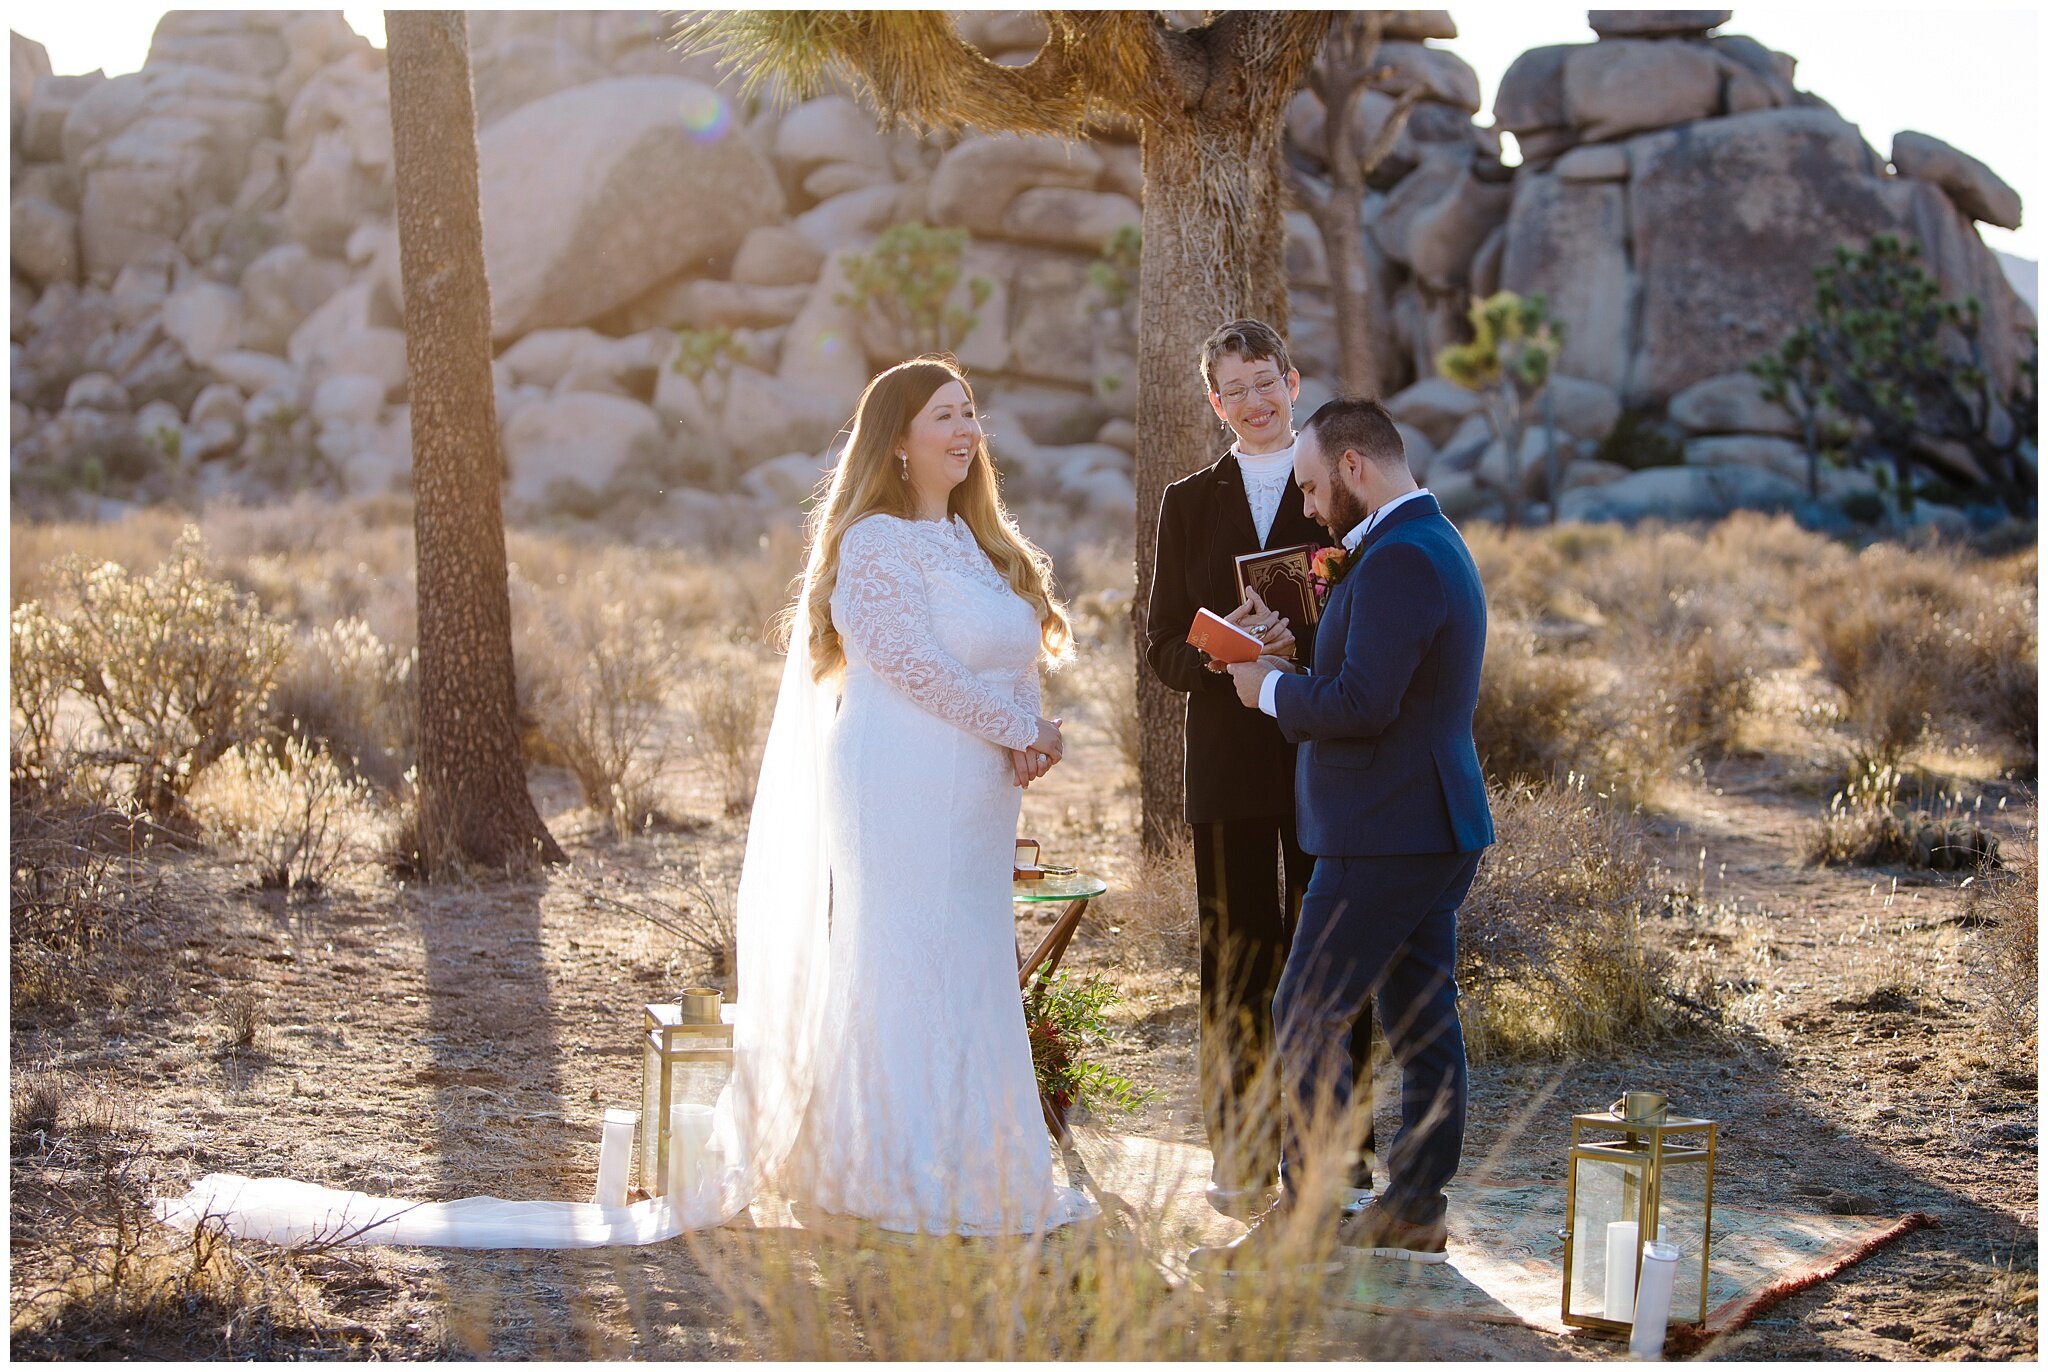 Joshua Tree Elopement - Michelle and Michael - Adventure Wedding Photographer_0041.jpg